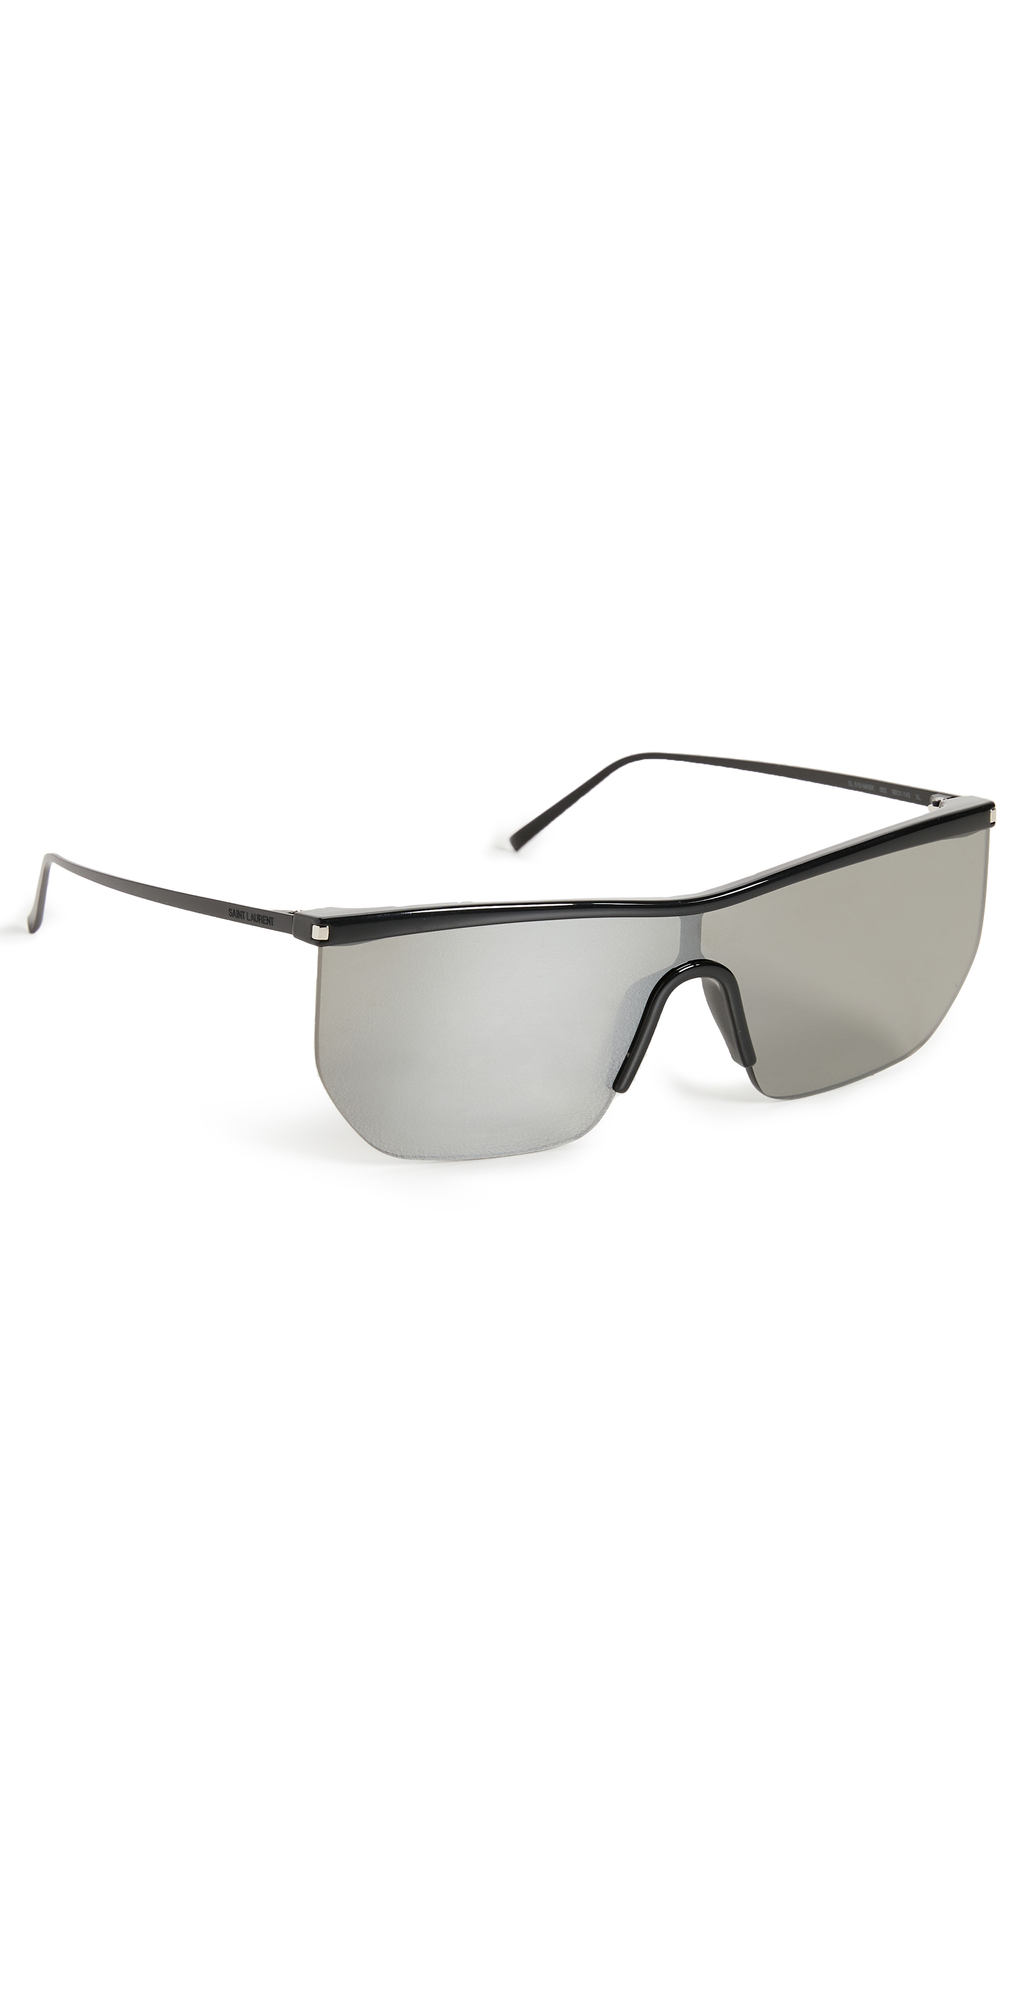 Saint Laurent SL 519 MASK Sunglasses in black